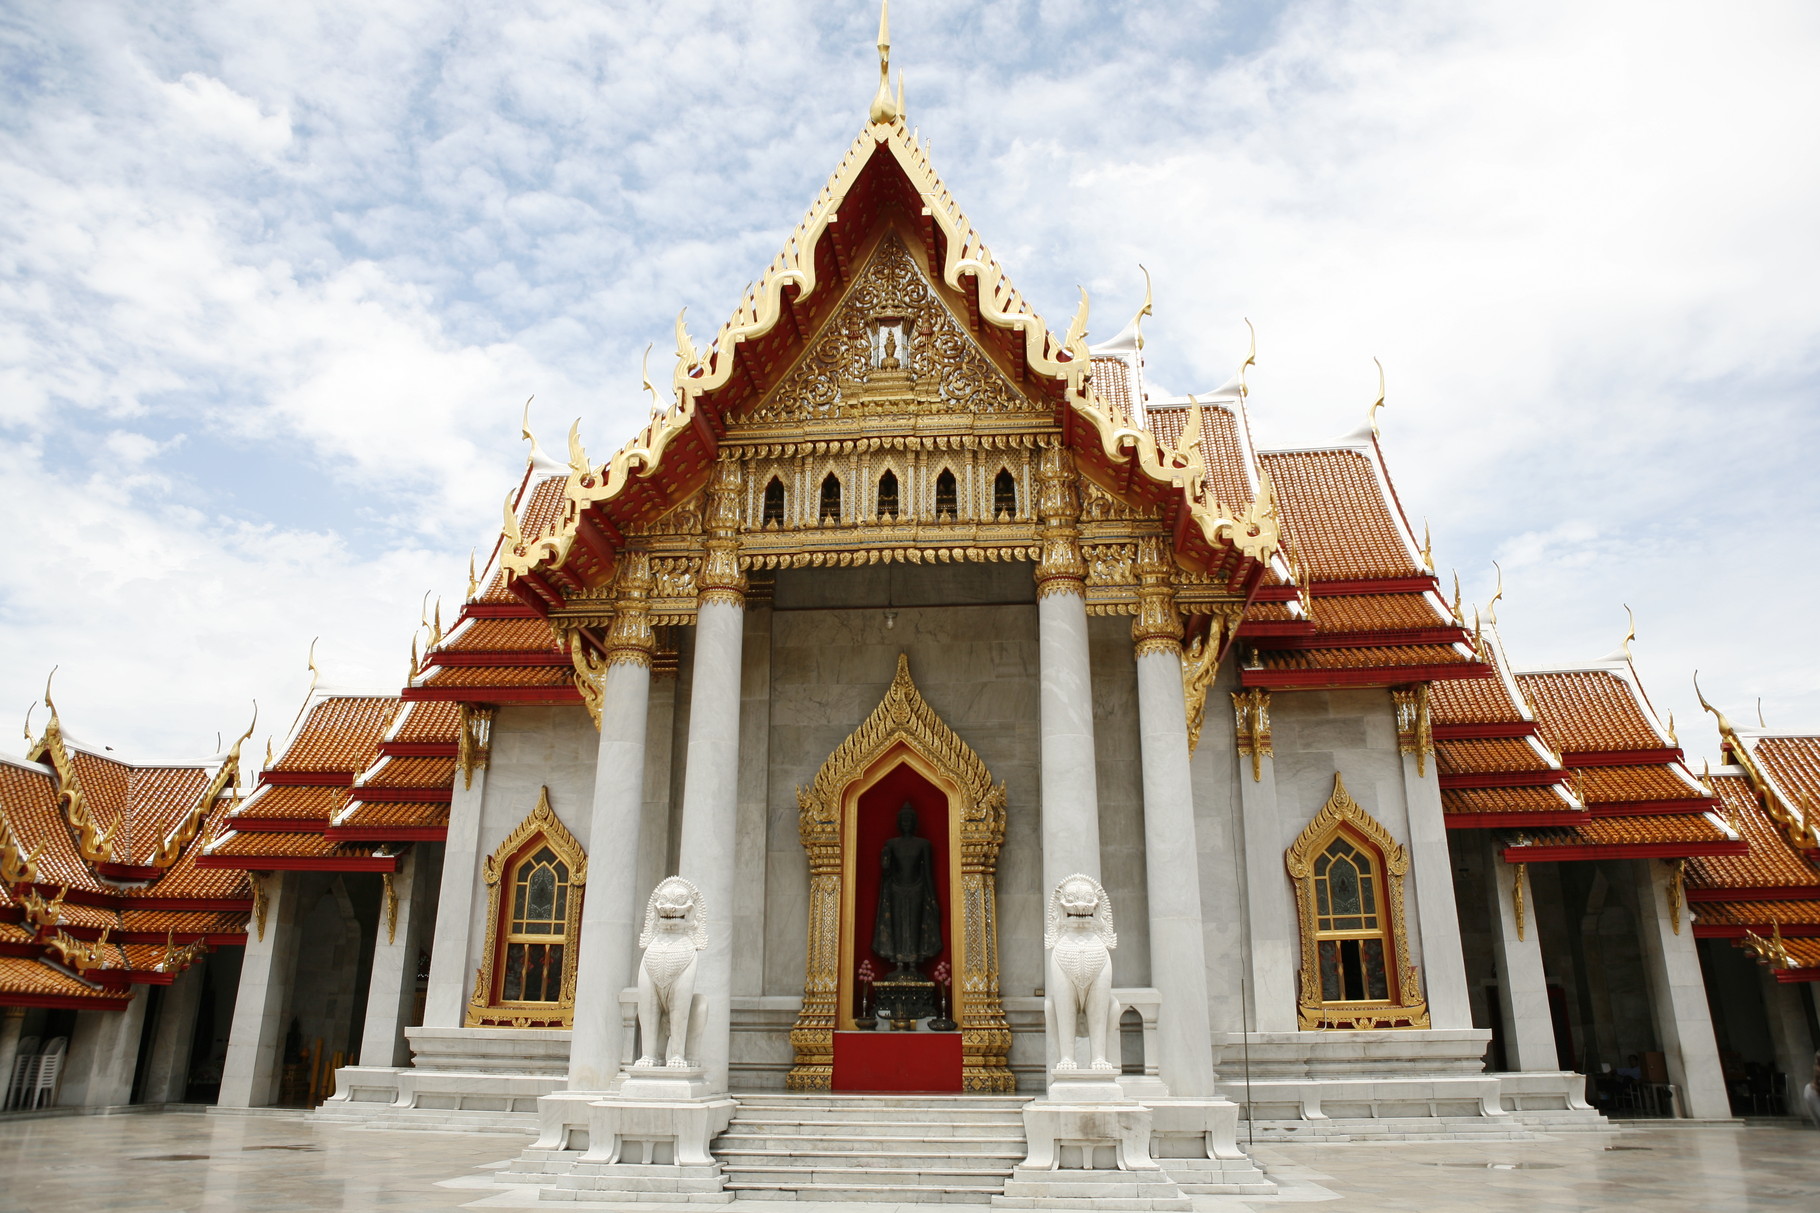 De Wat Benchamabophit tempel in Bangkok, Thailand.